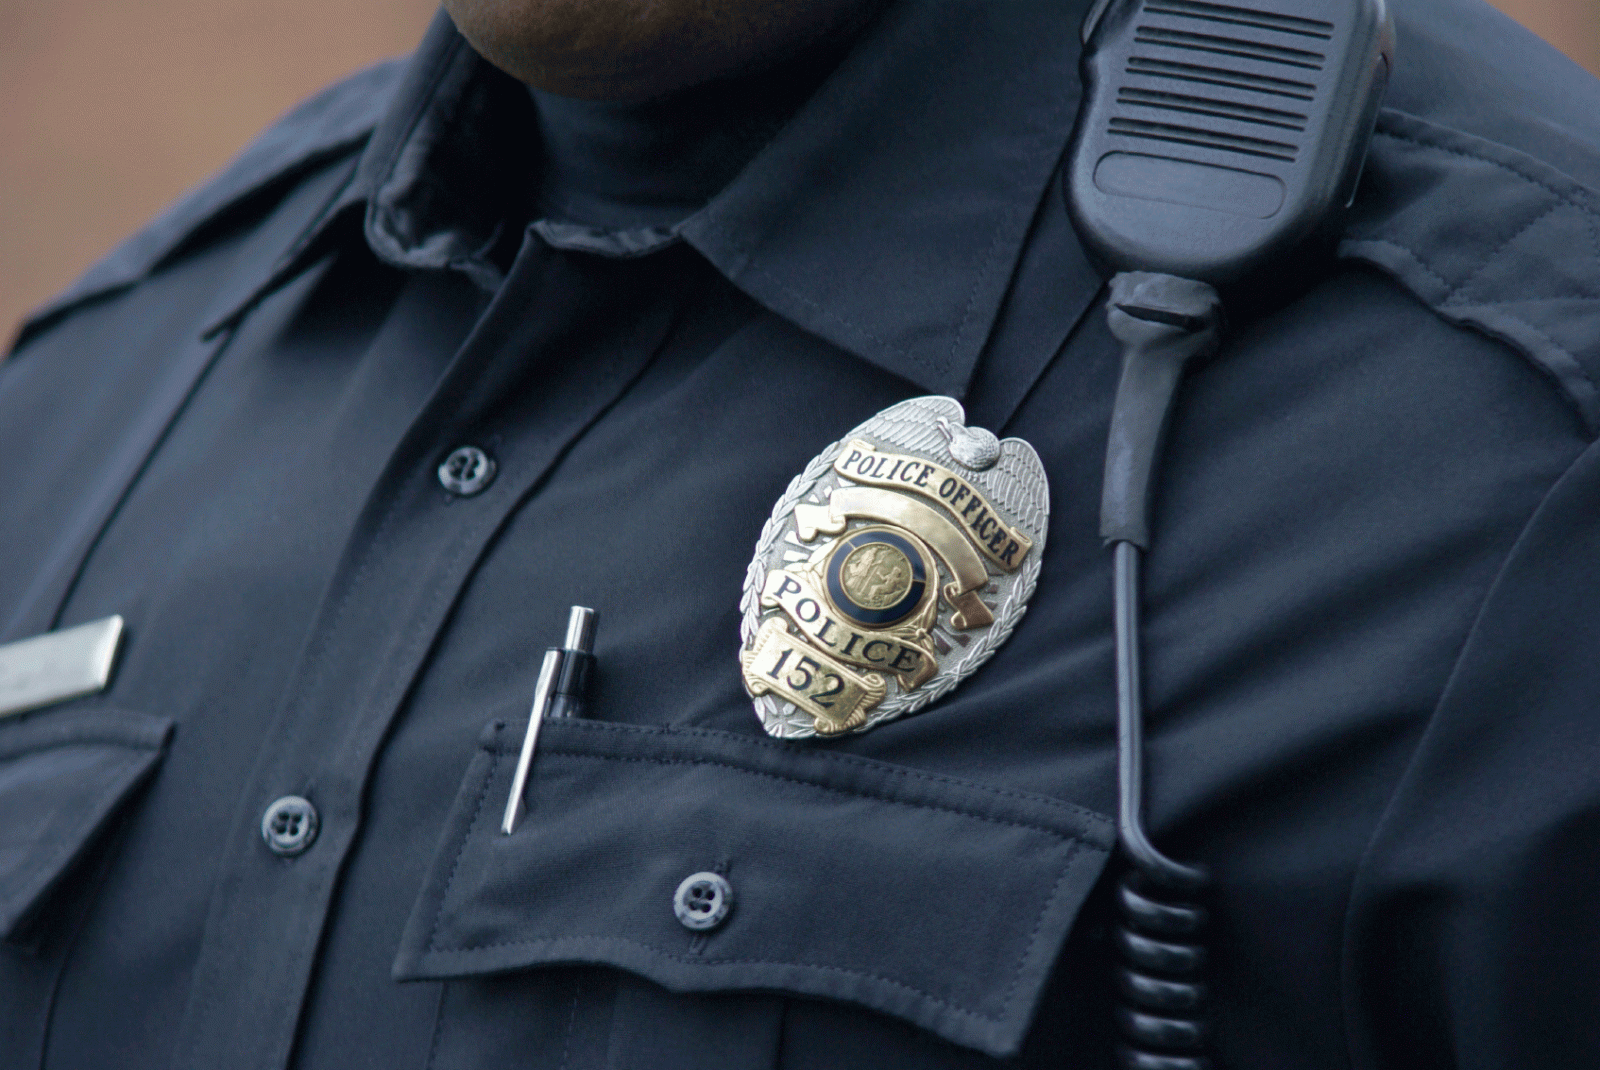 Law enforcement training